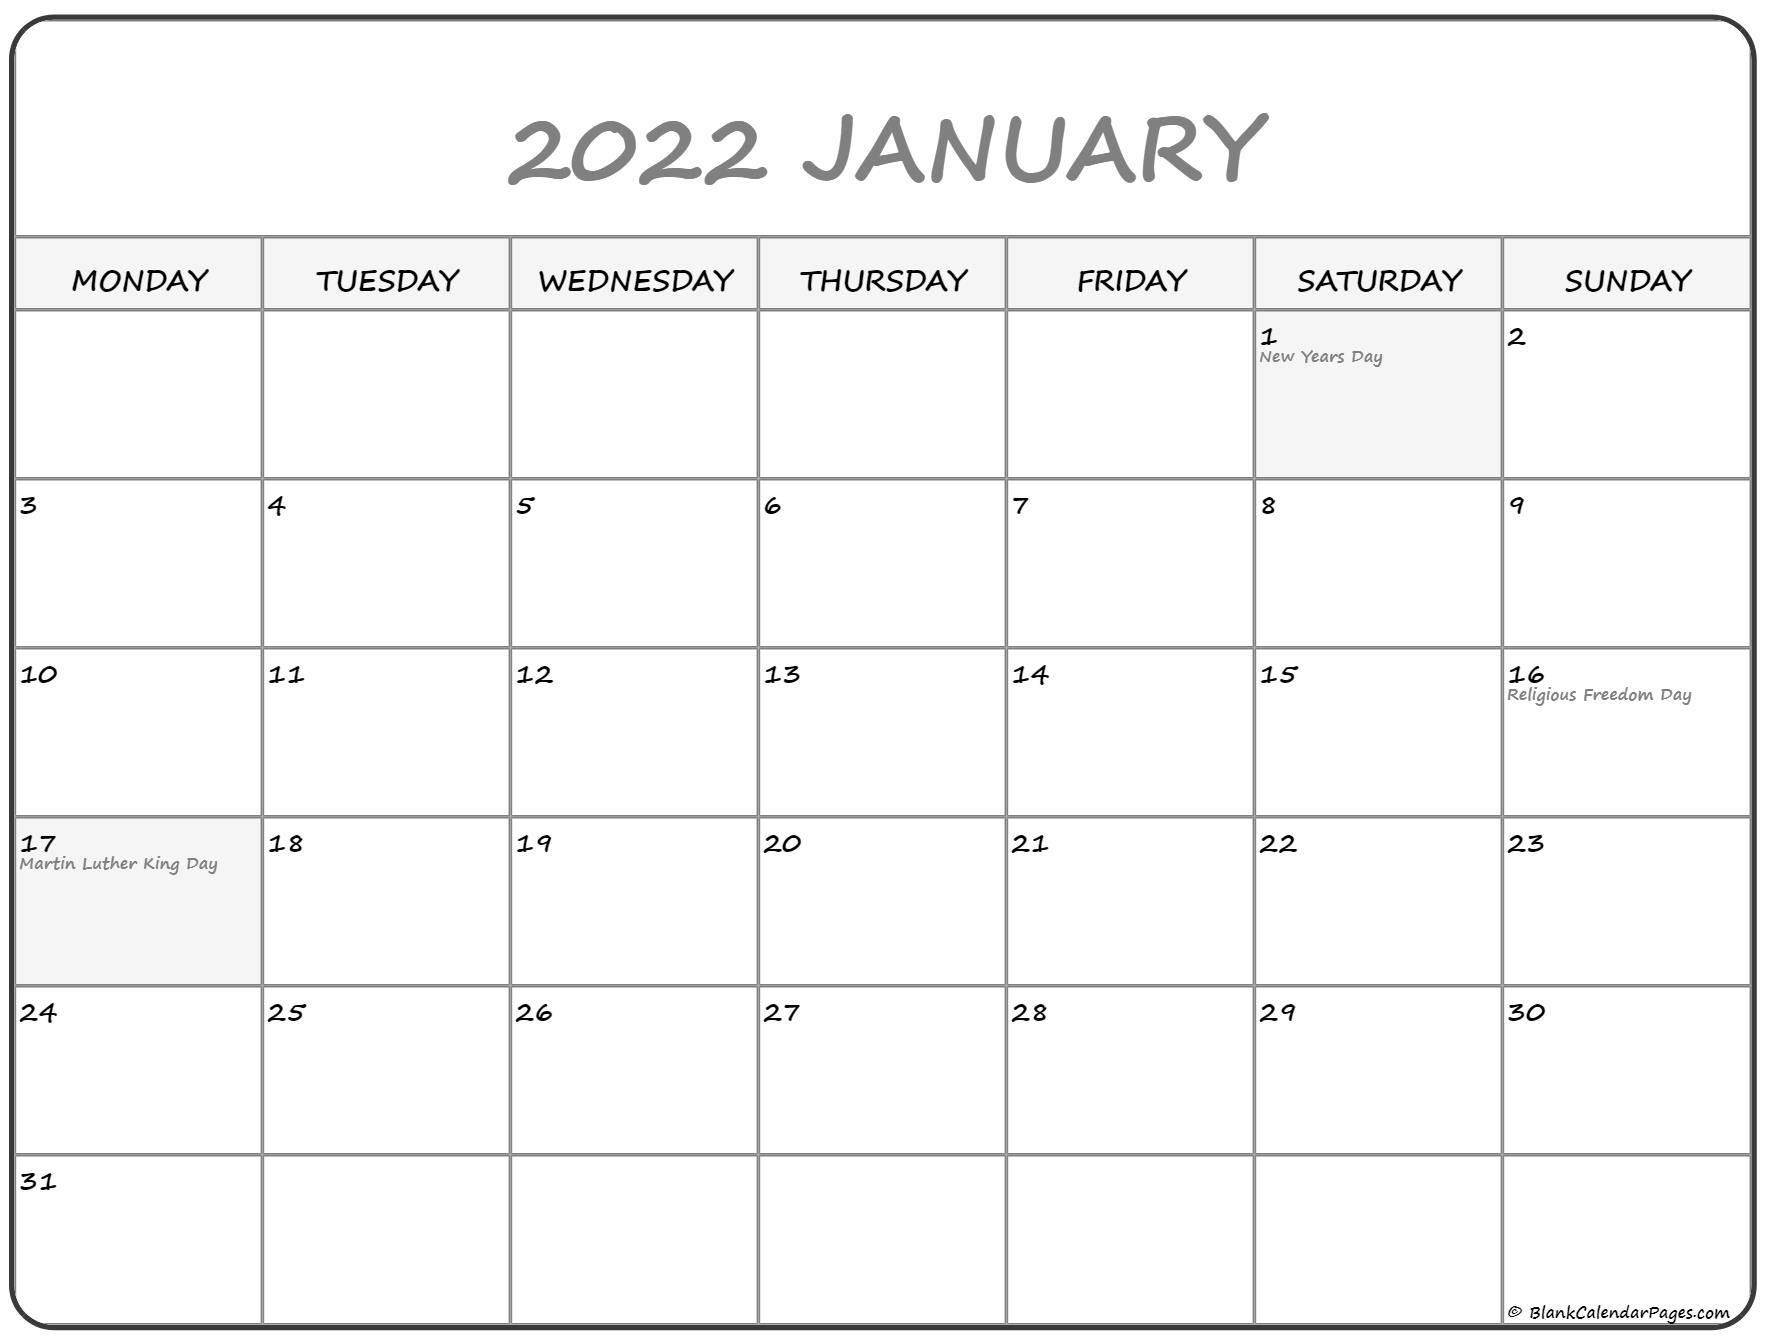 Get Calendar 2022 January Holidays